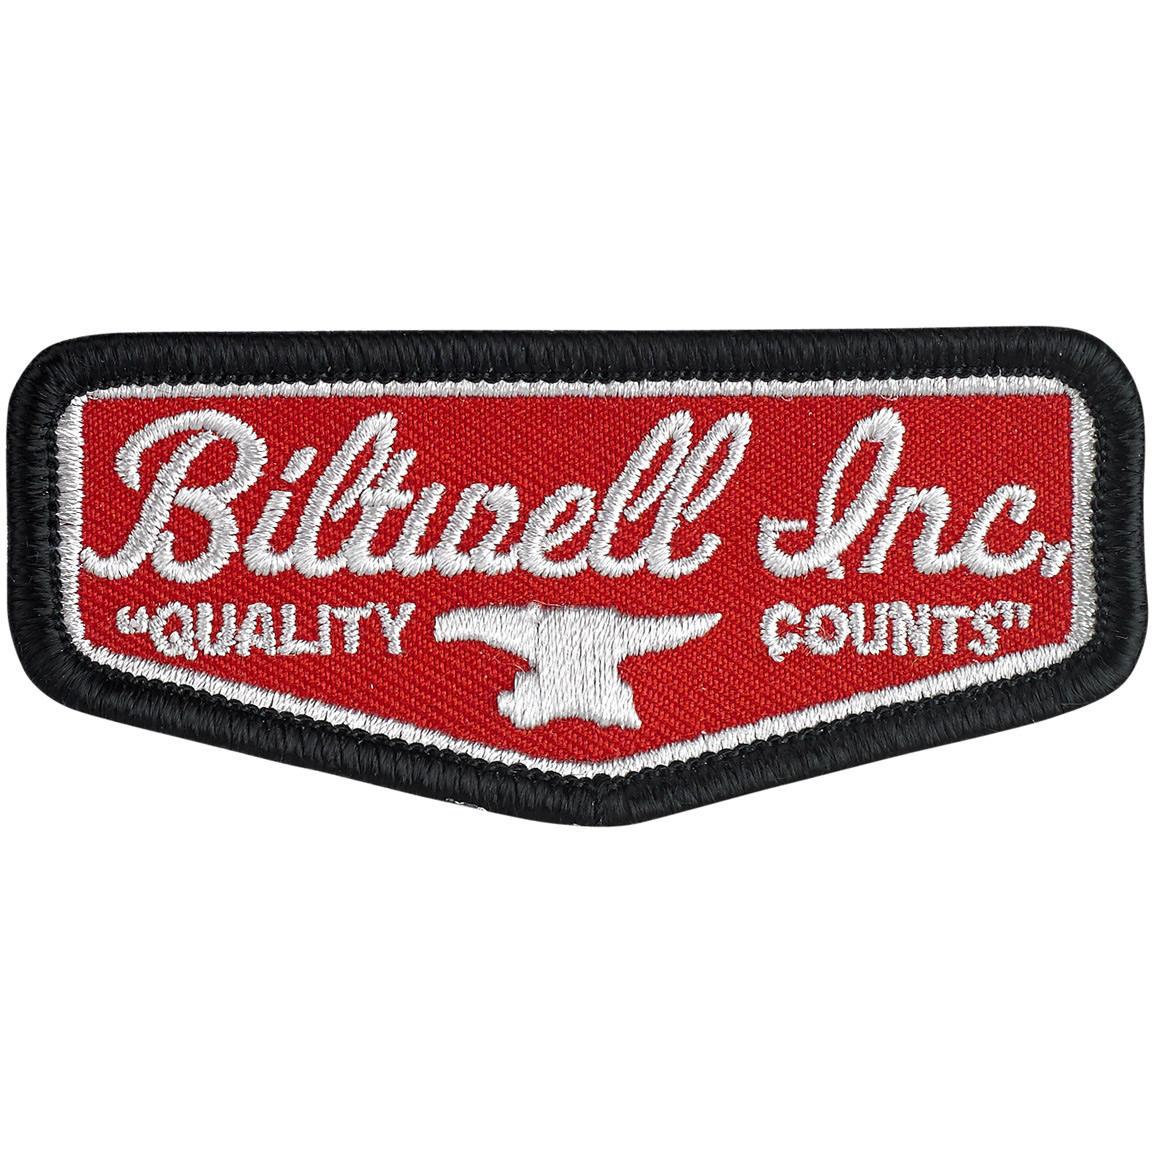 Biltwell Patch - Shield Black/Red